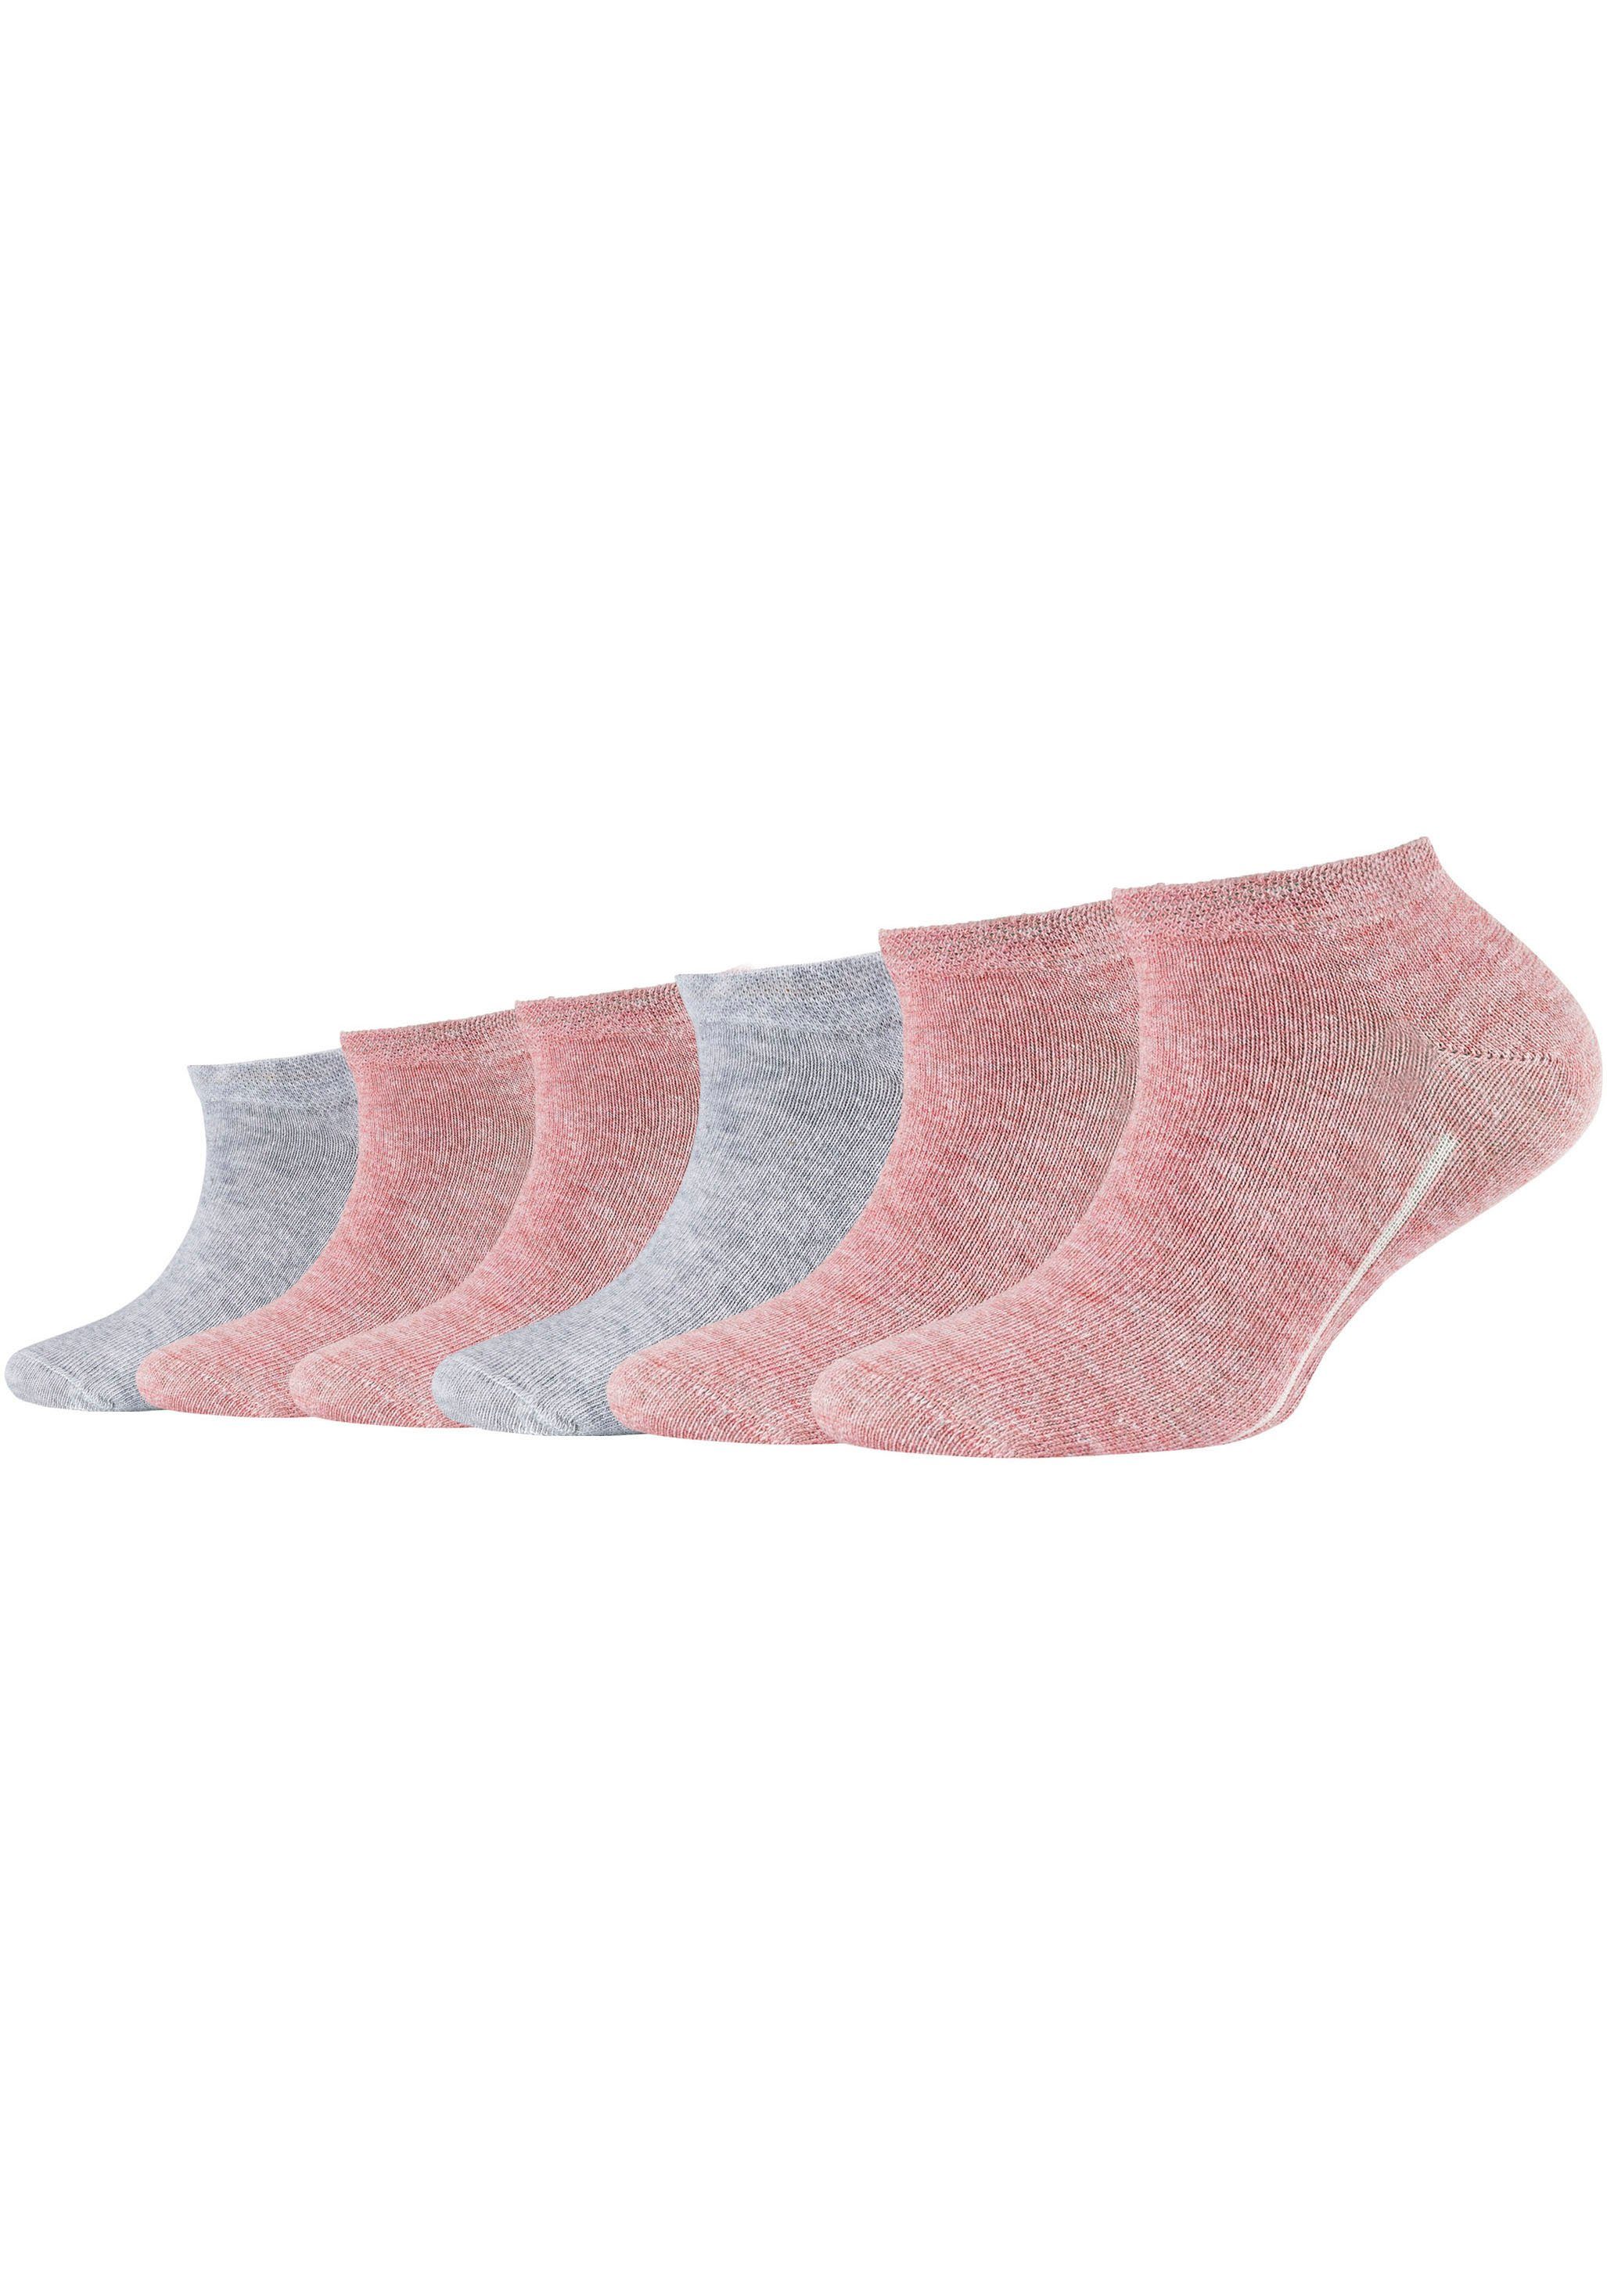 Camano Sneakersocken (Packung, 6-Paar) Hoher gekämmter Baumwolle Anteil meliert rosa-grau an